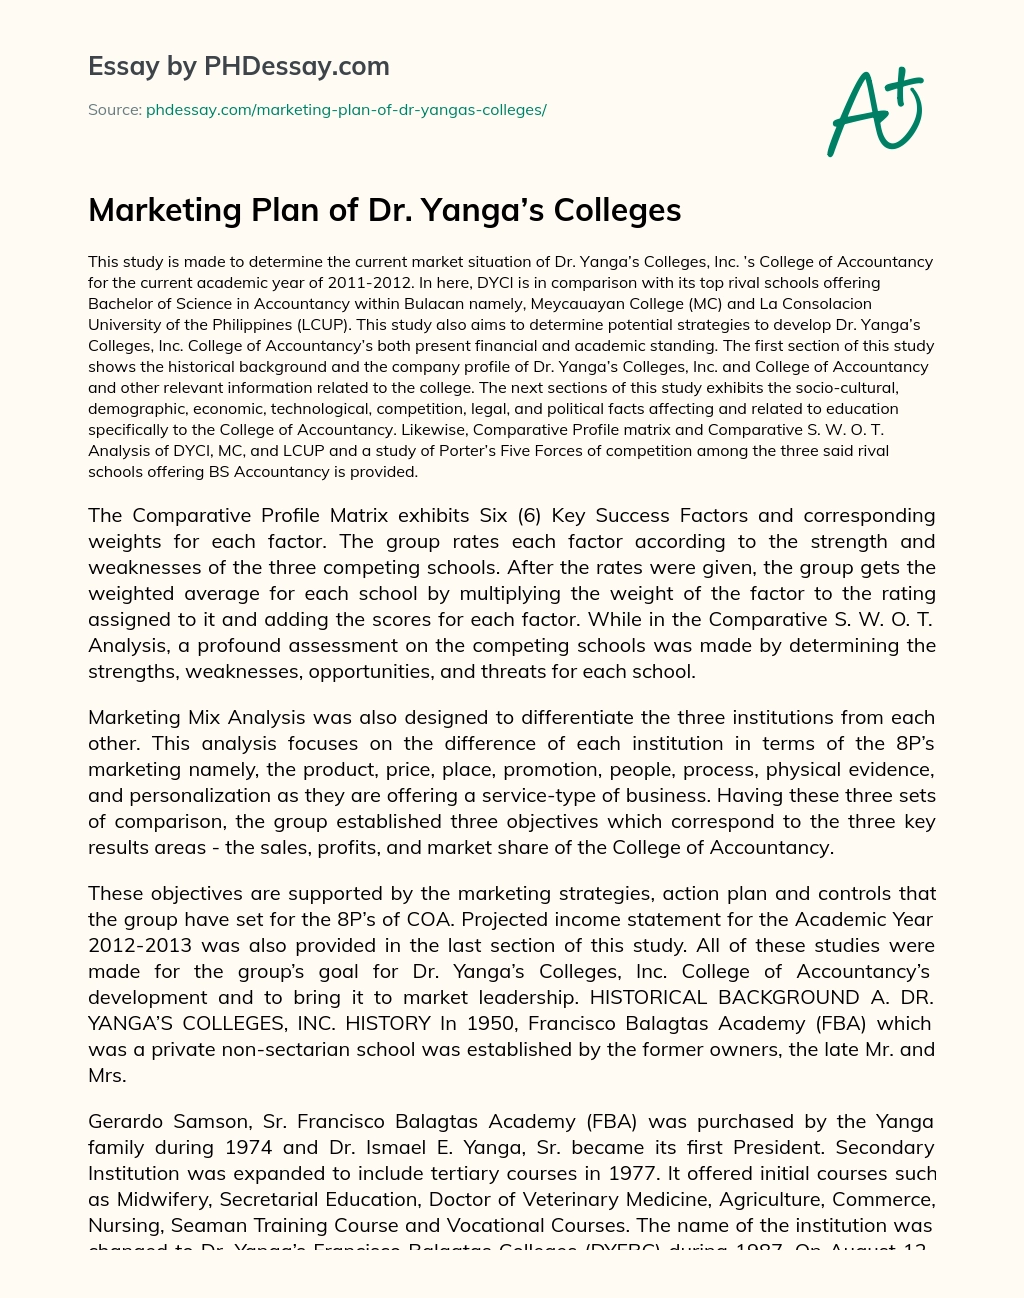 Marketing Plan of Dr. Yanga’s Colleges essay